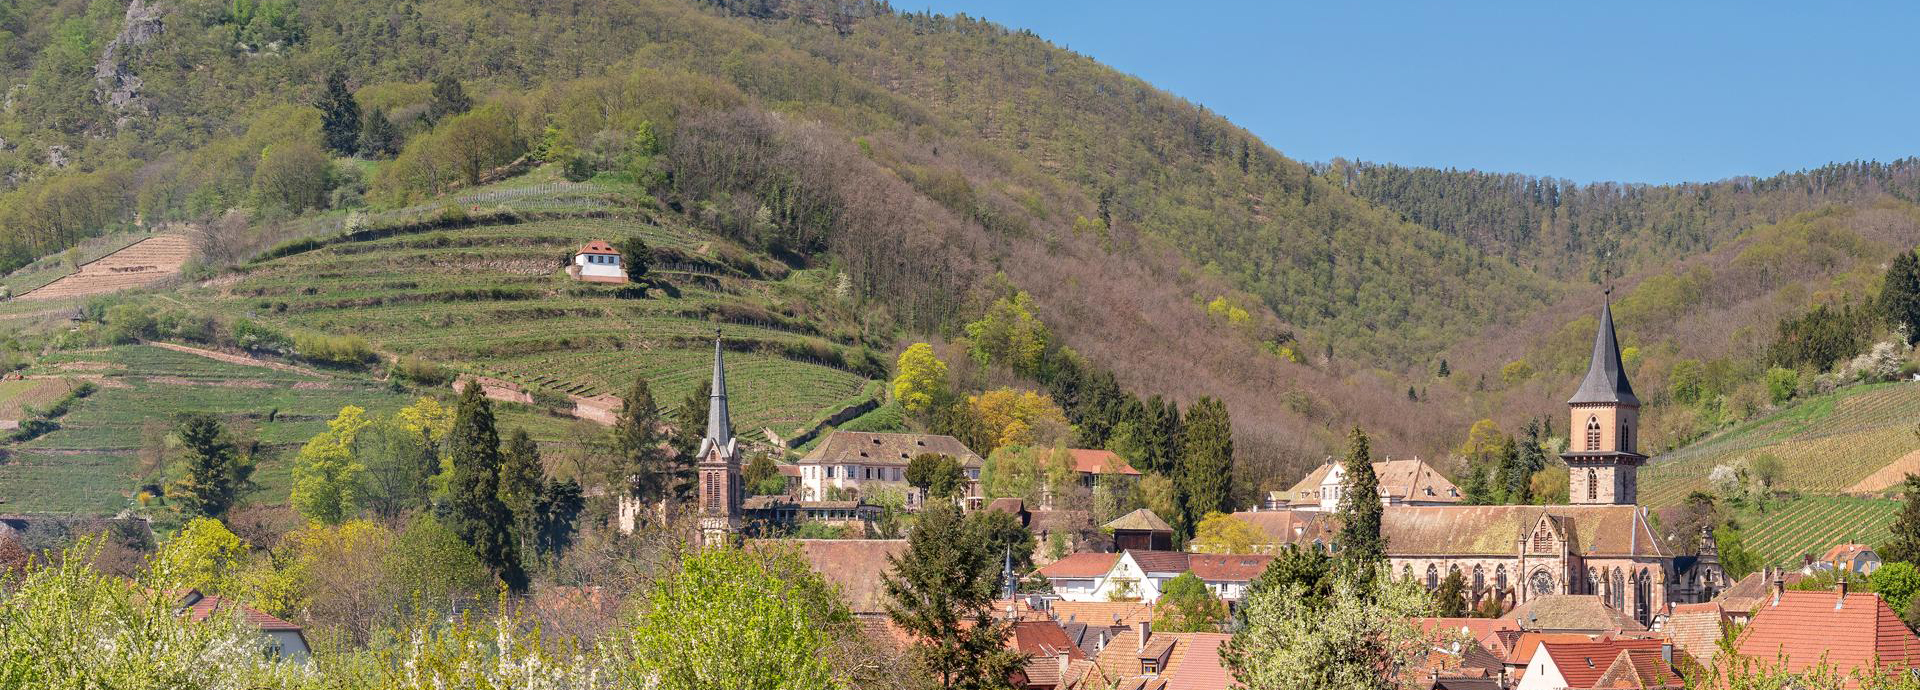 Ribeauvillé, medieval village of Alsace